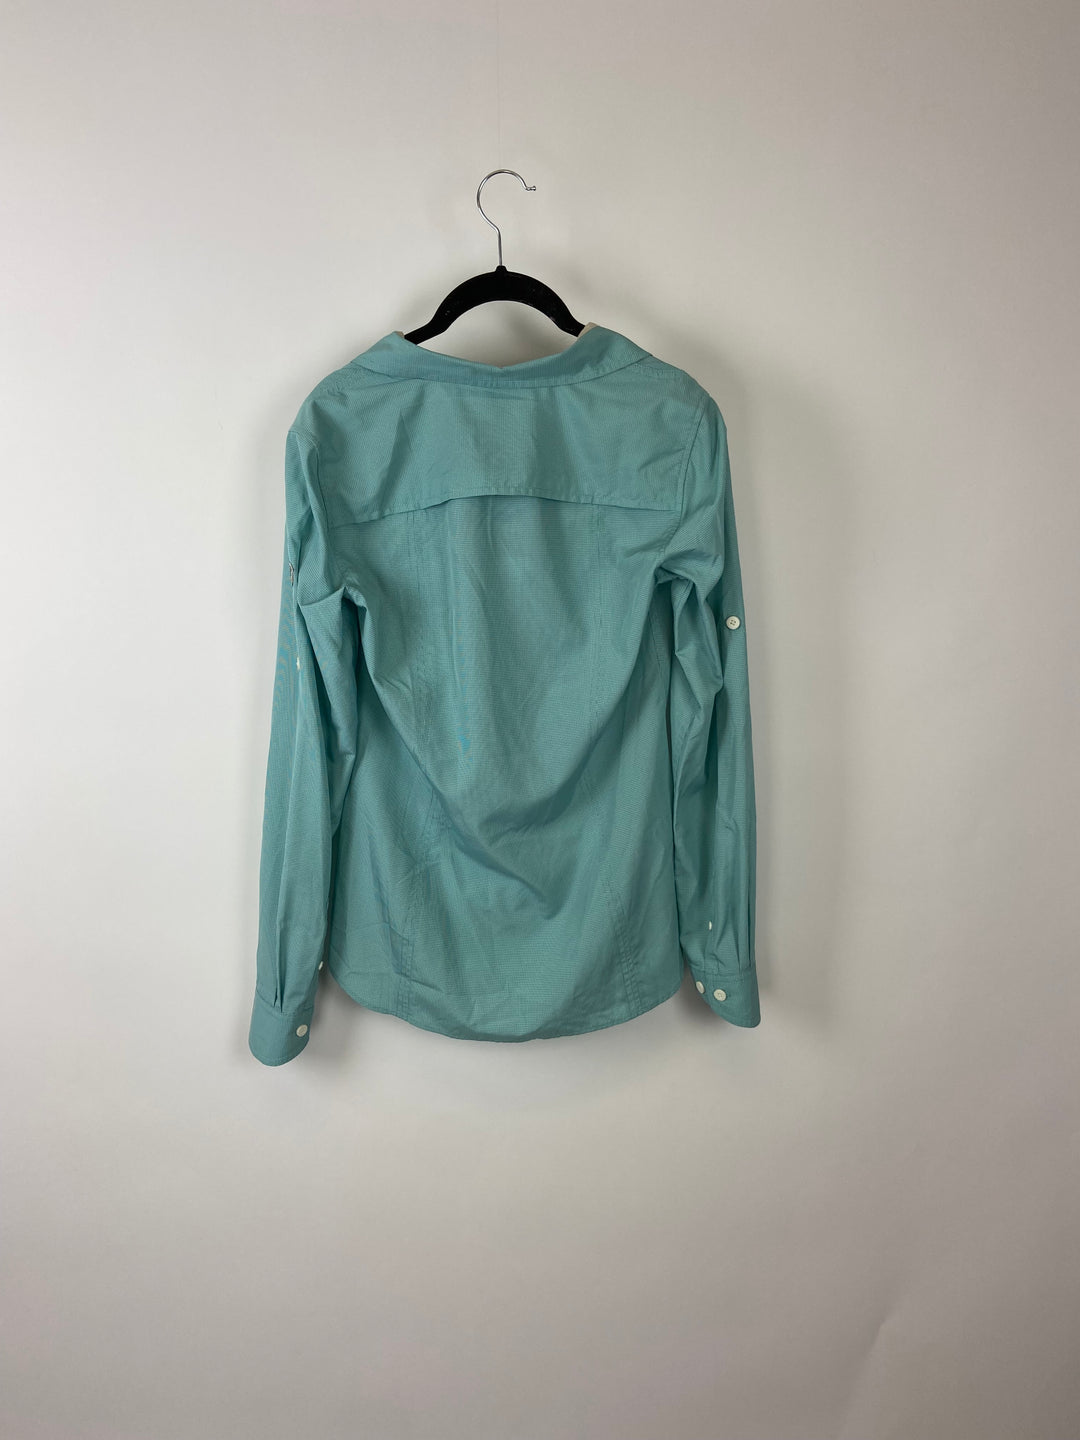 Long Sleeve Teal Shirt- Small